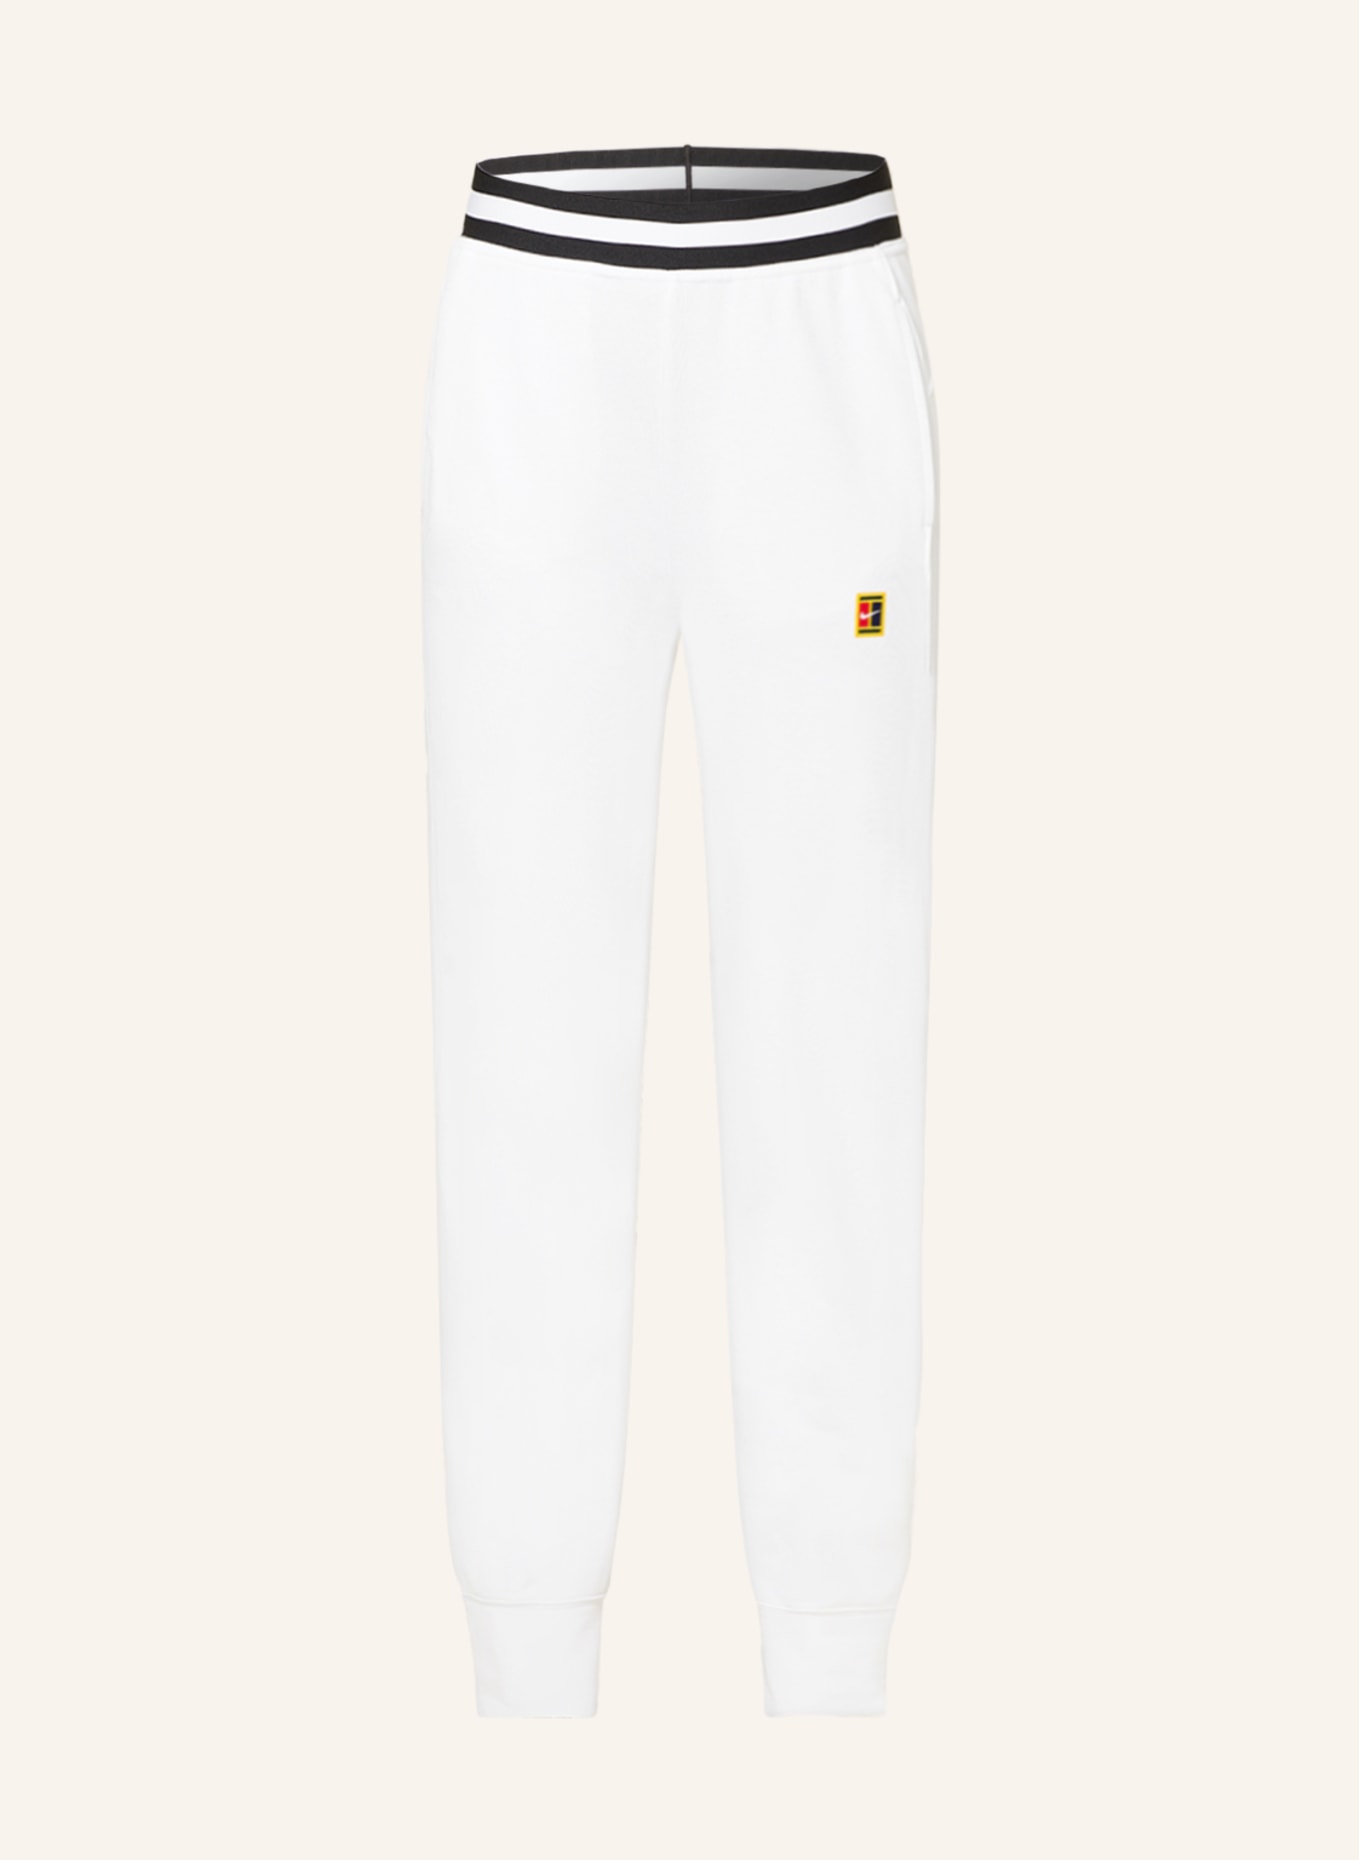 Nike Tennis trousers NIKECOURT DRI-FIT HERITAGE in white